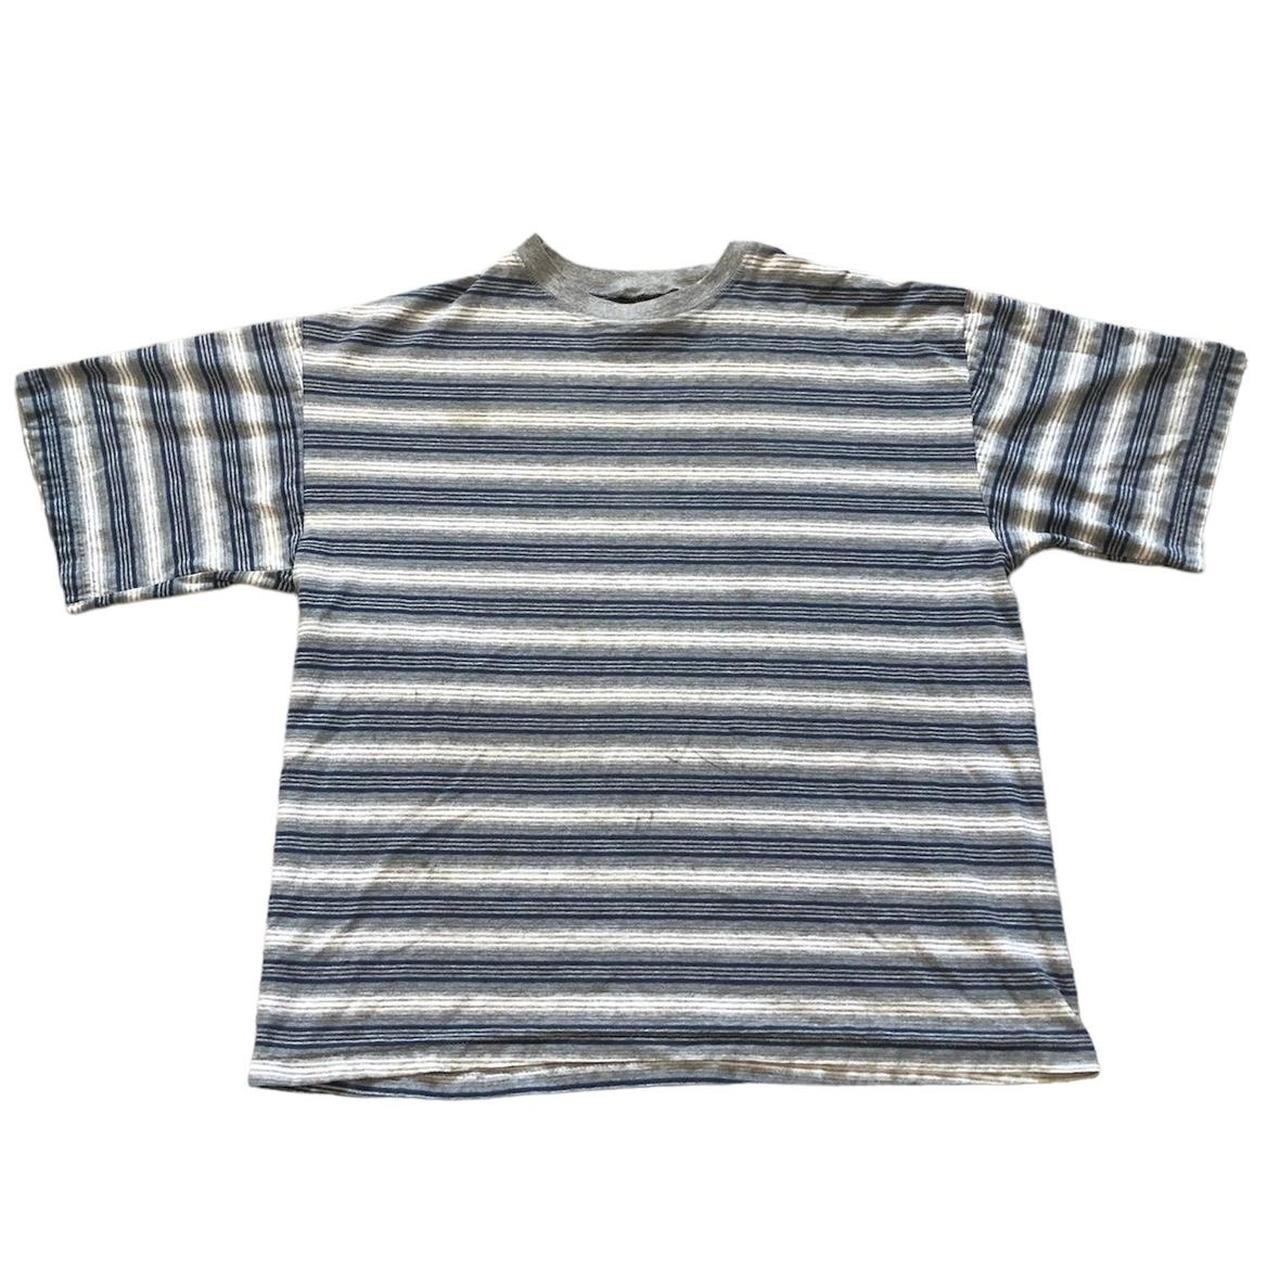 Vintage striped shirt -super sick blue, gray, and... - Depop